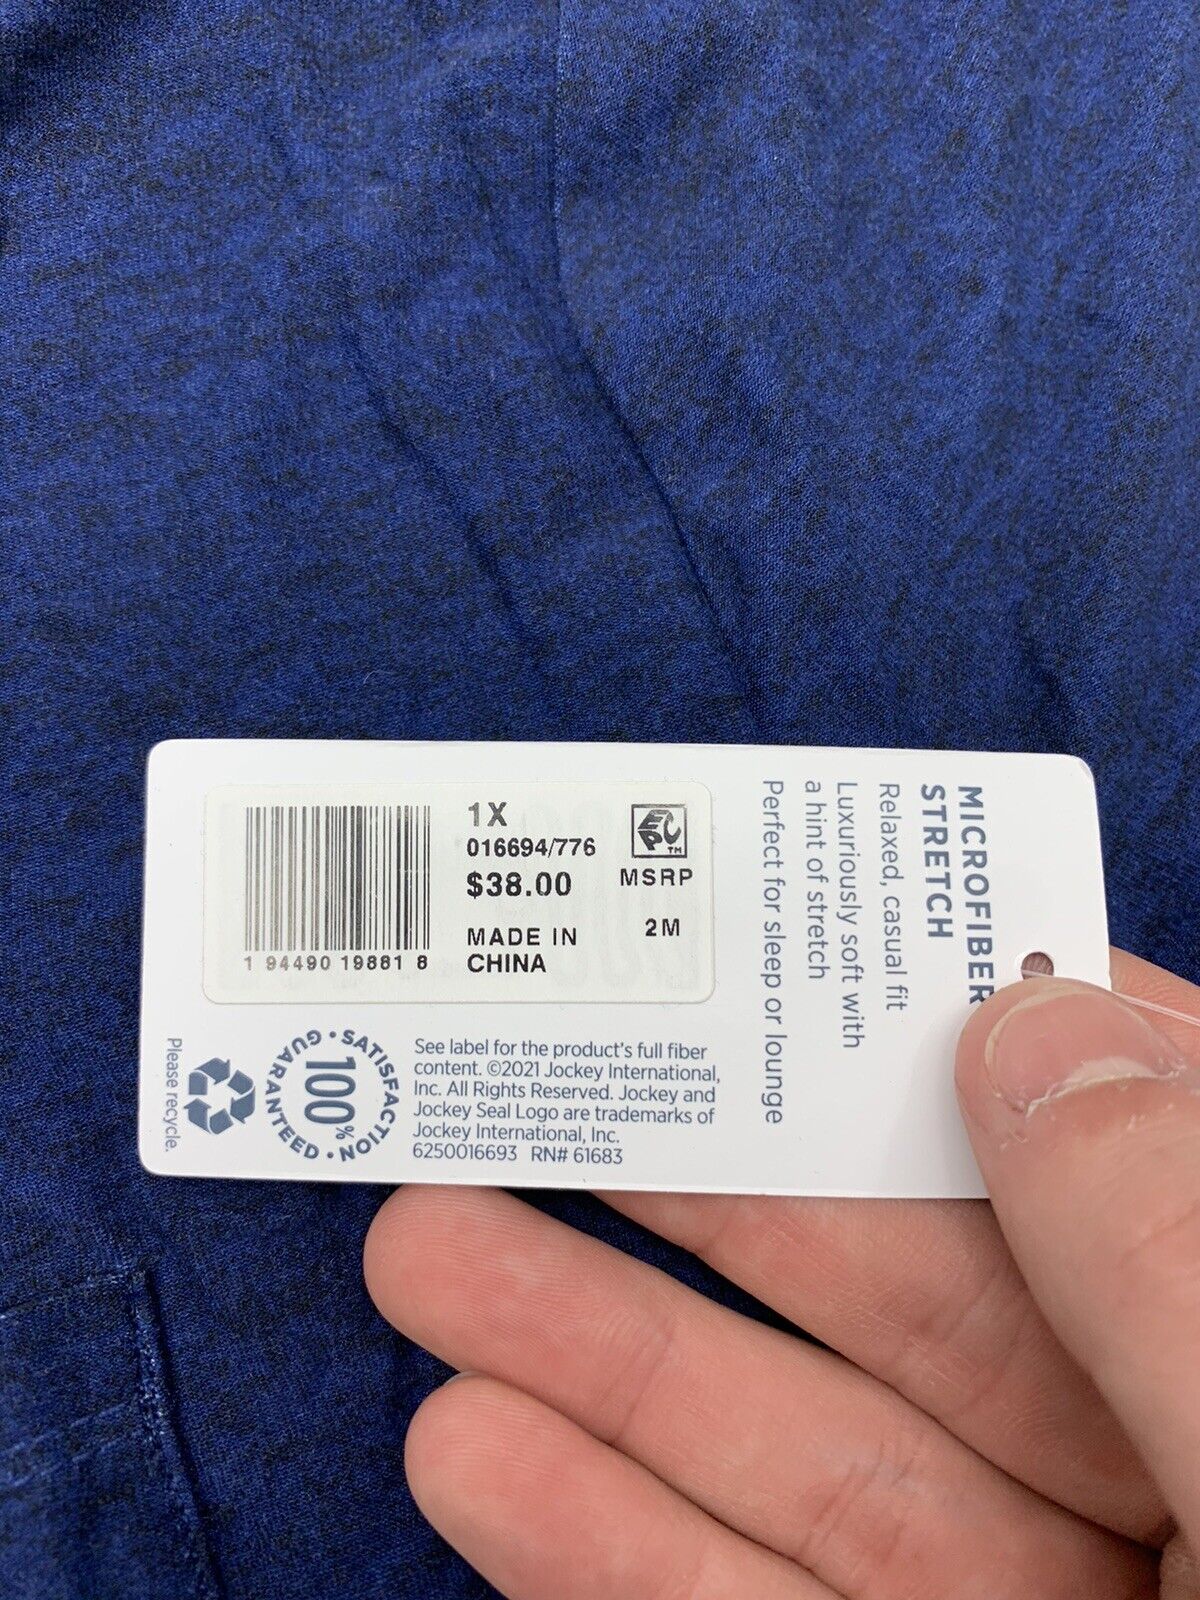 Jockey Womens Blue Night Shirt Size 1X - beyond exchange